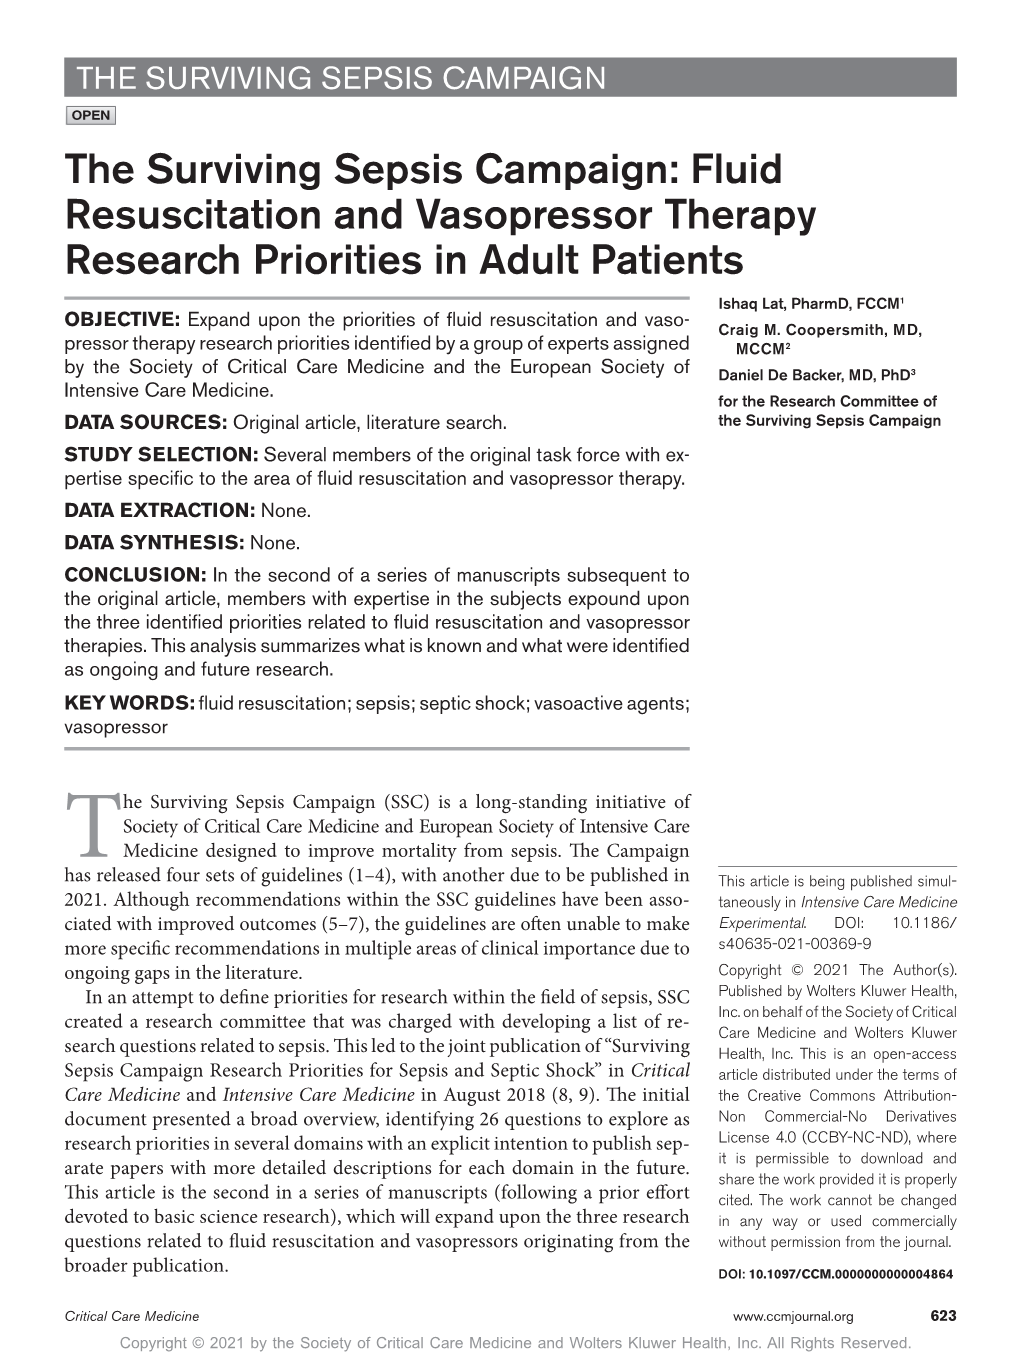 The Surviving Sepsis Campaign: Fluid Resuscitation and Vasopressor